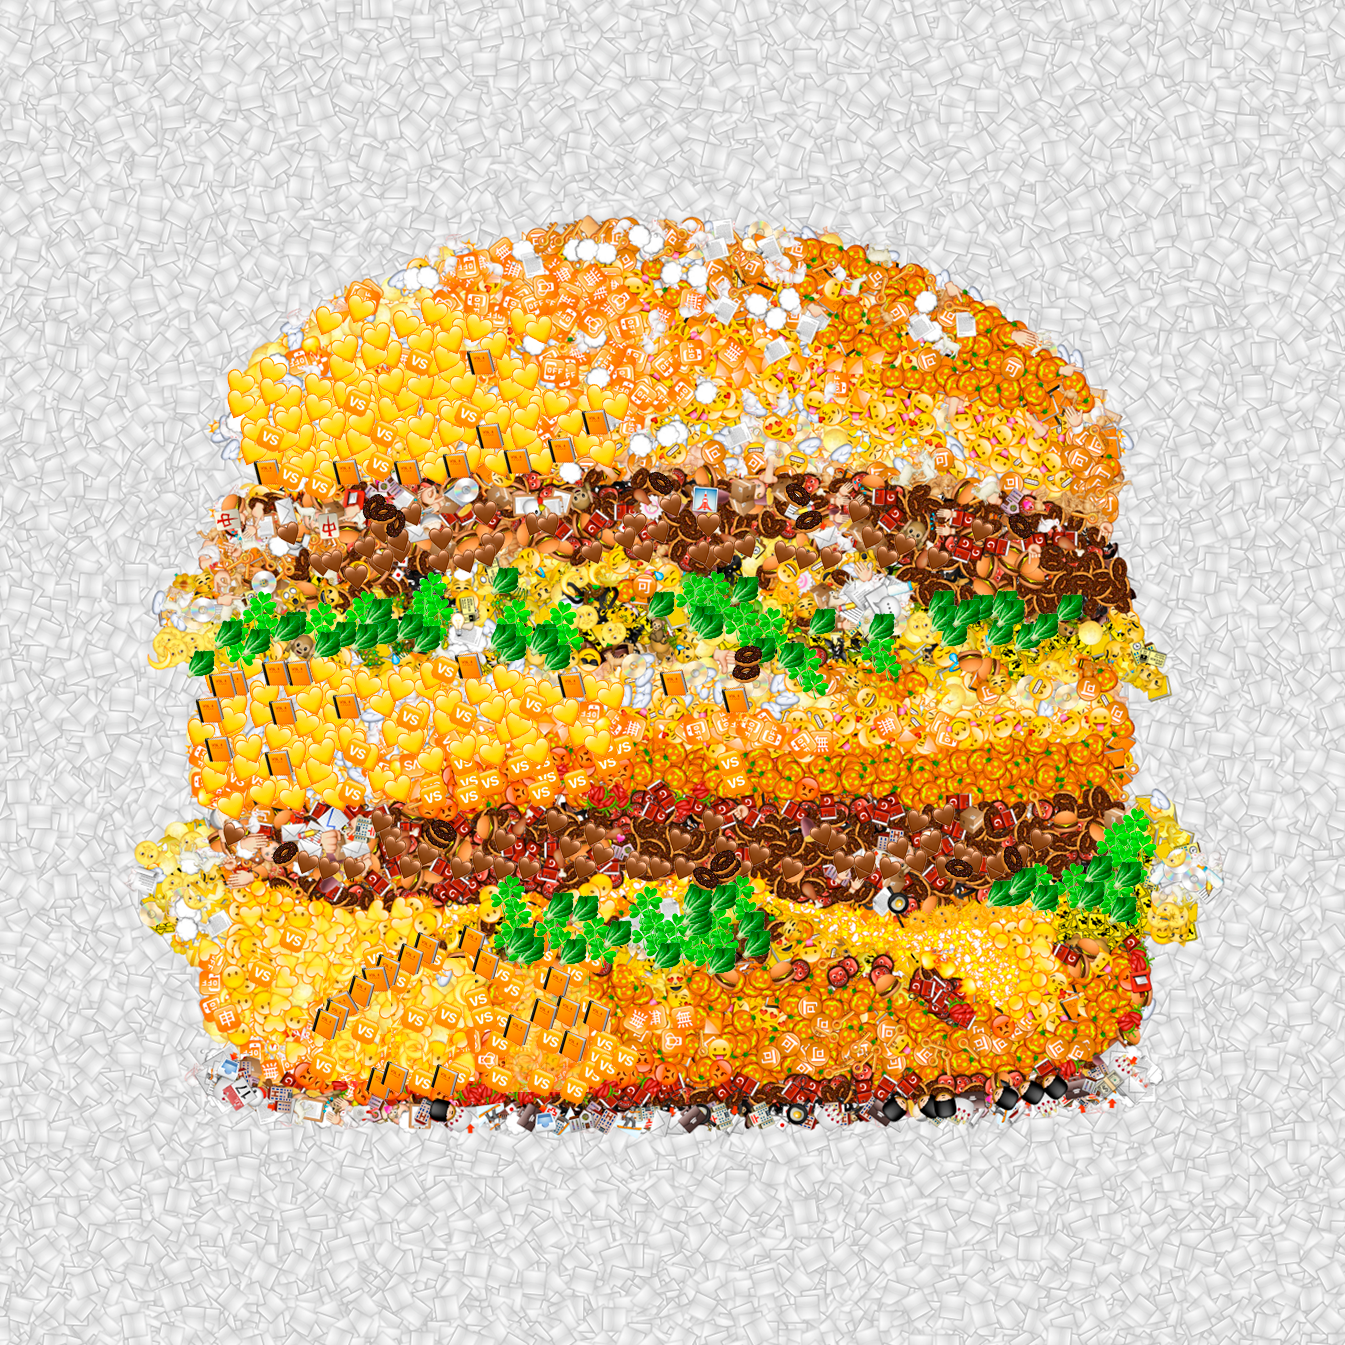 Big Mac, la hamburguesa insignia